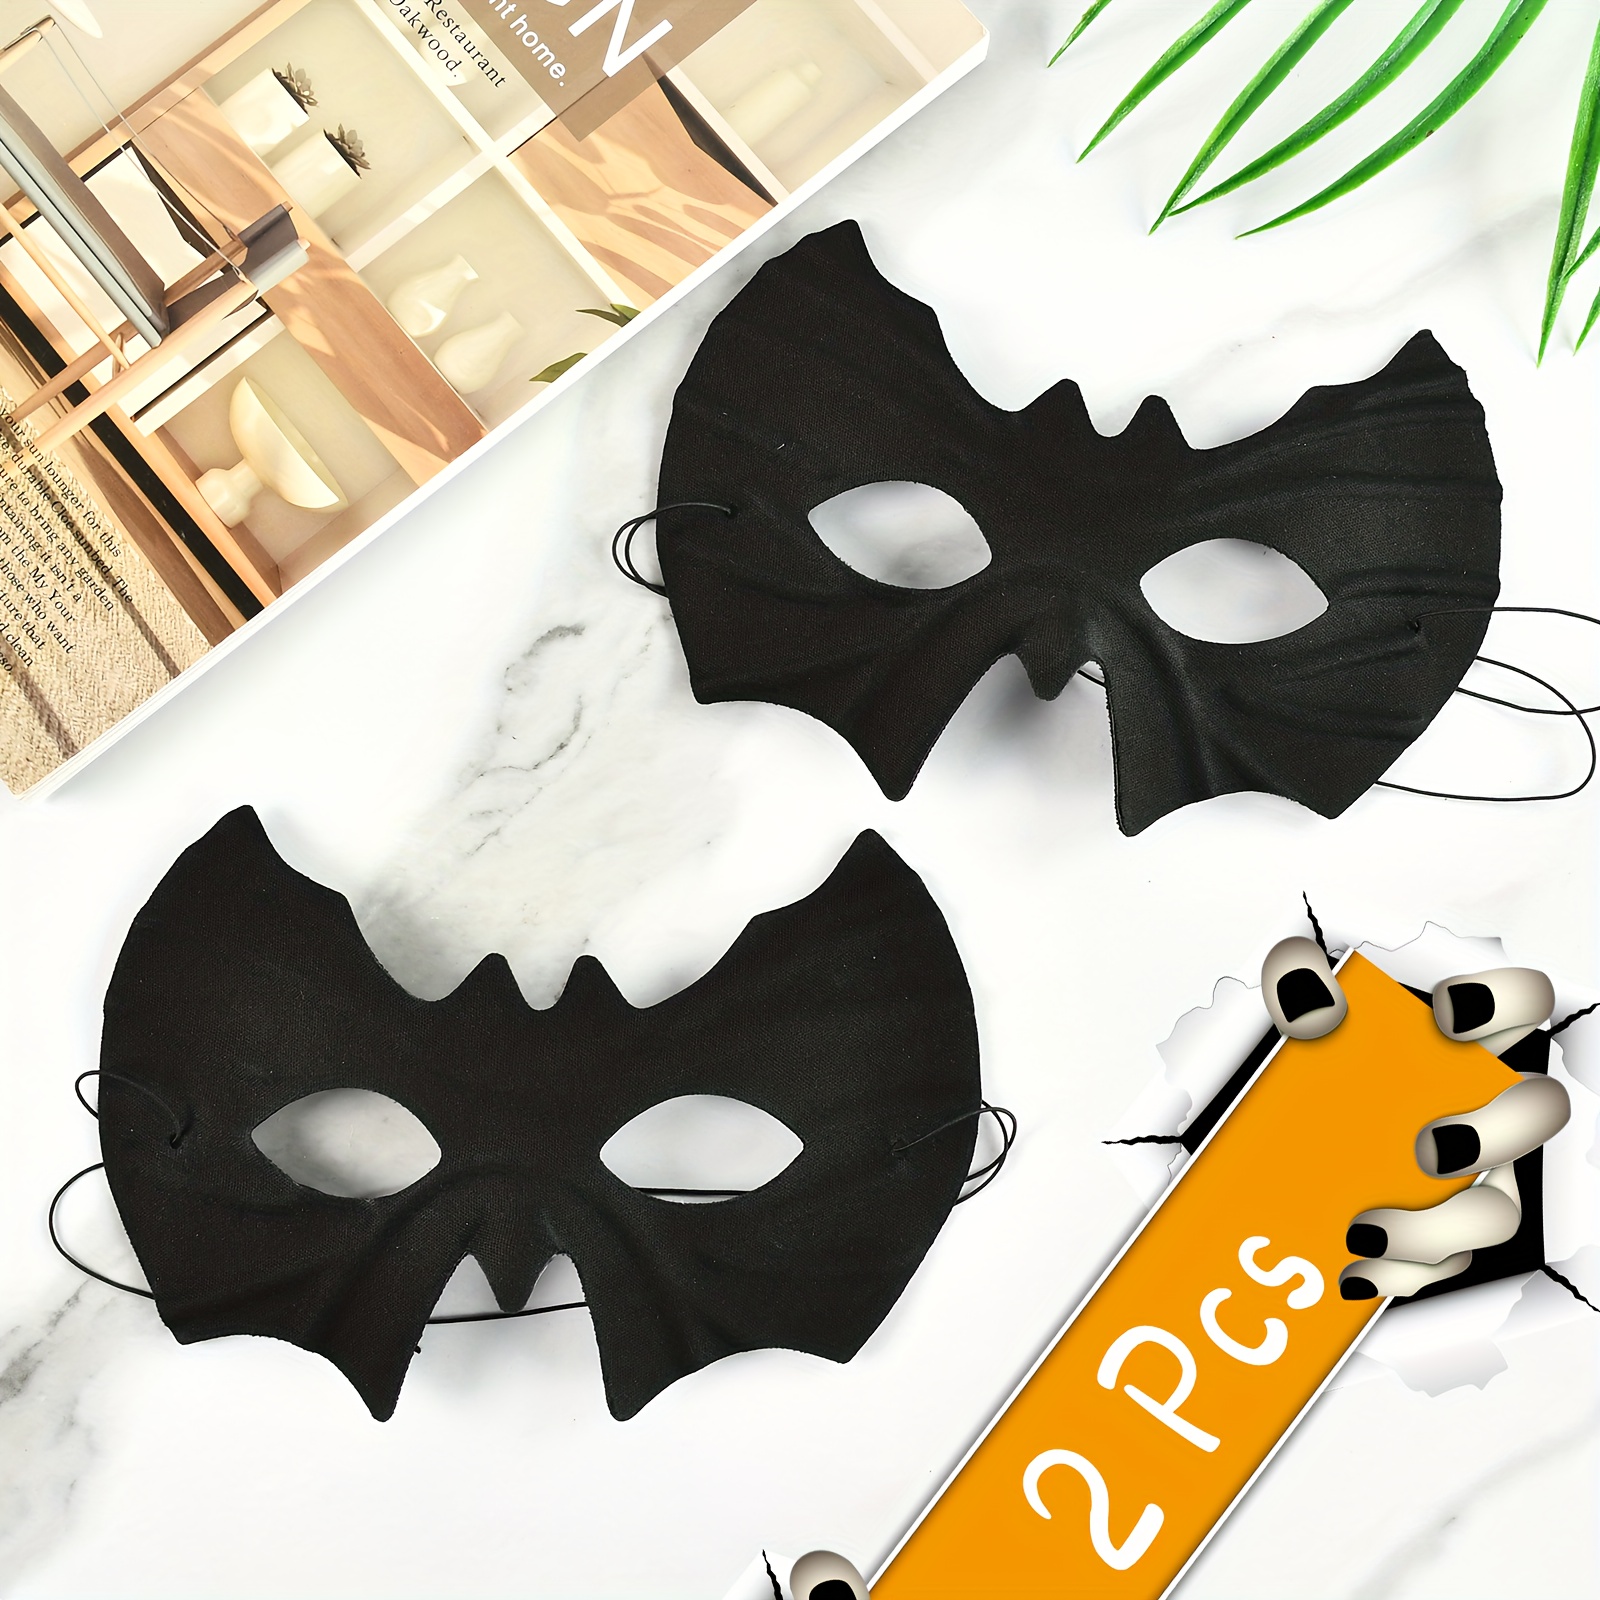 30 Pieces Felt Animal Masks for Kids Jungle Theme Party Favors Supplies